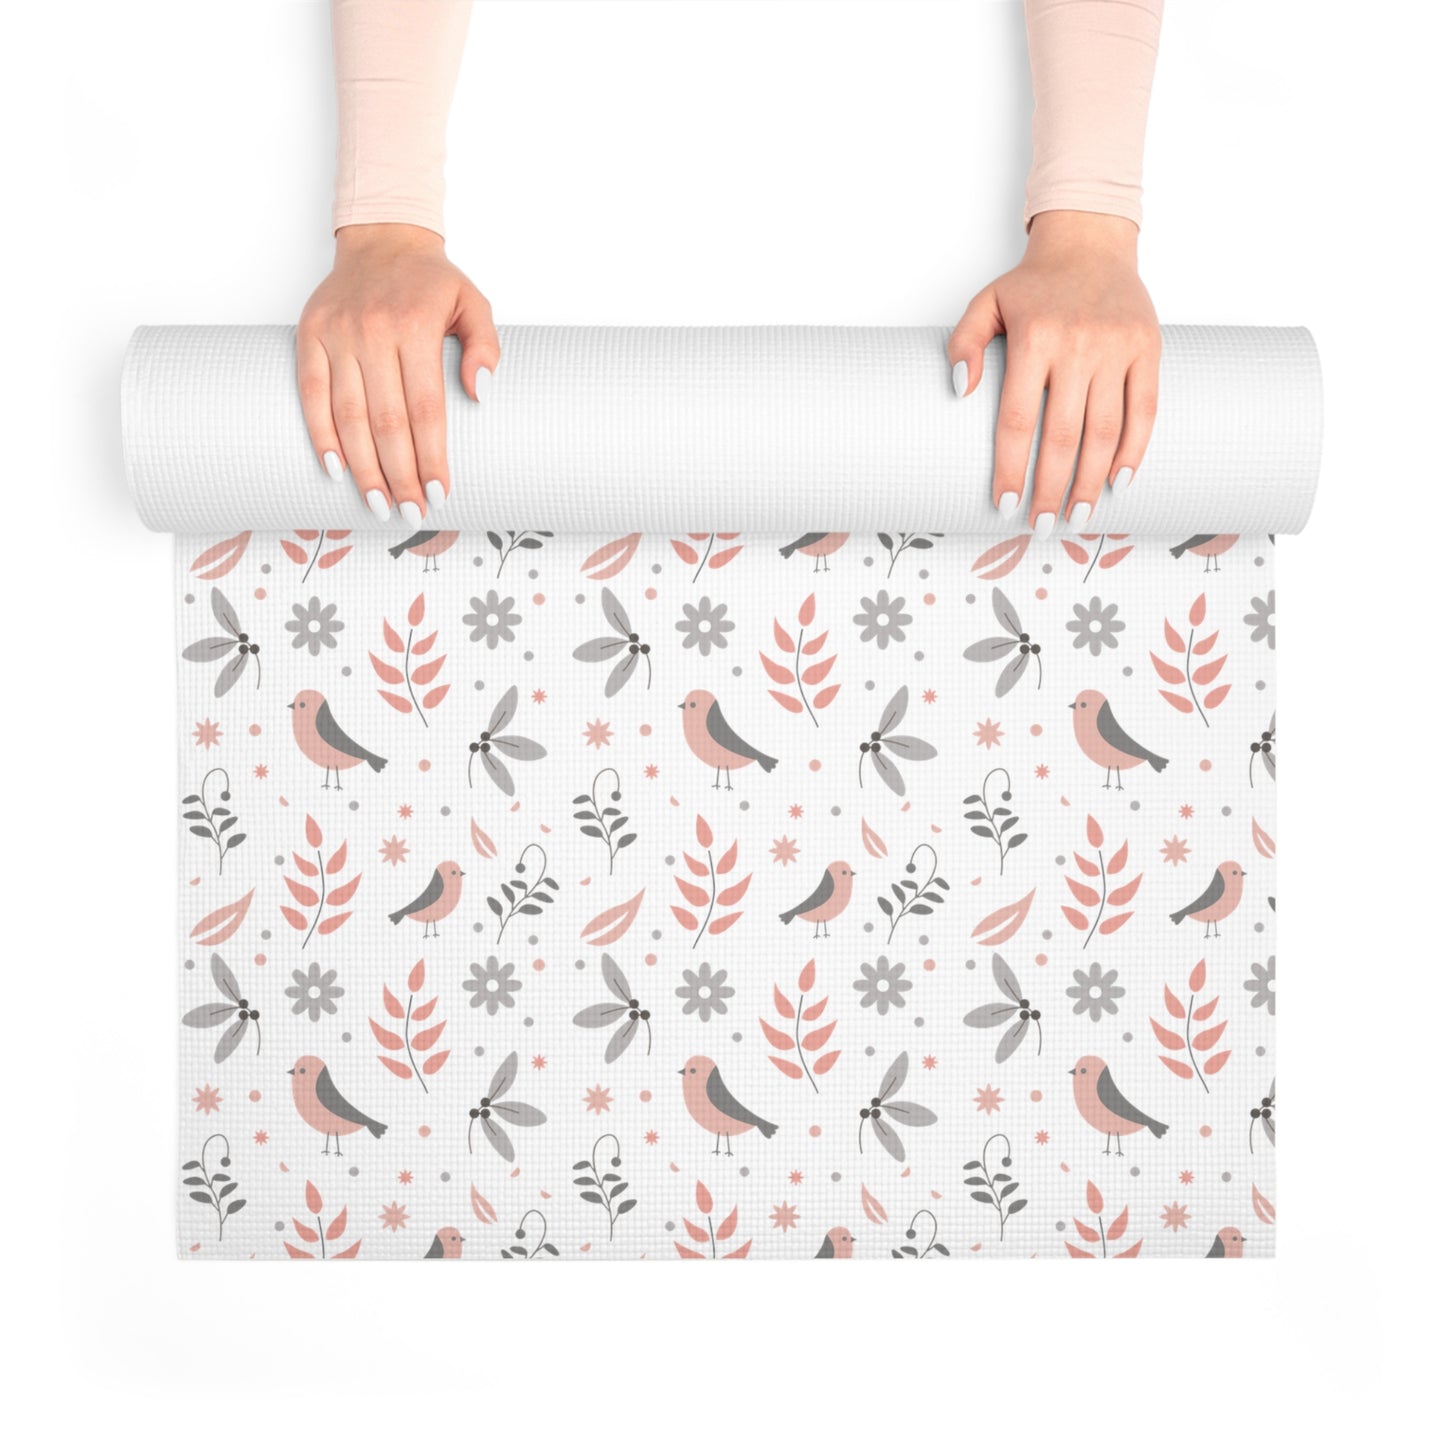 Niccie's Birdy Foam Yoga Mat - Elevate Your Practice with Comfort